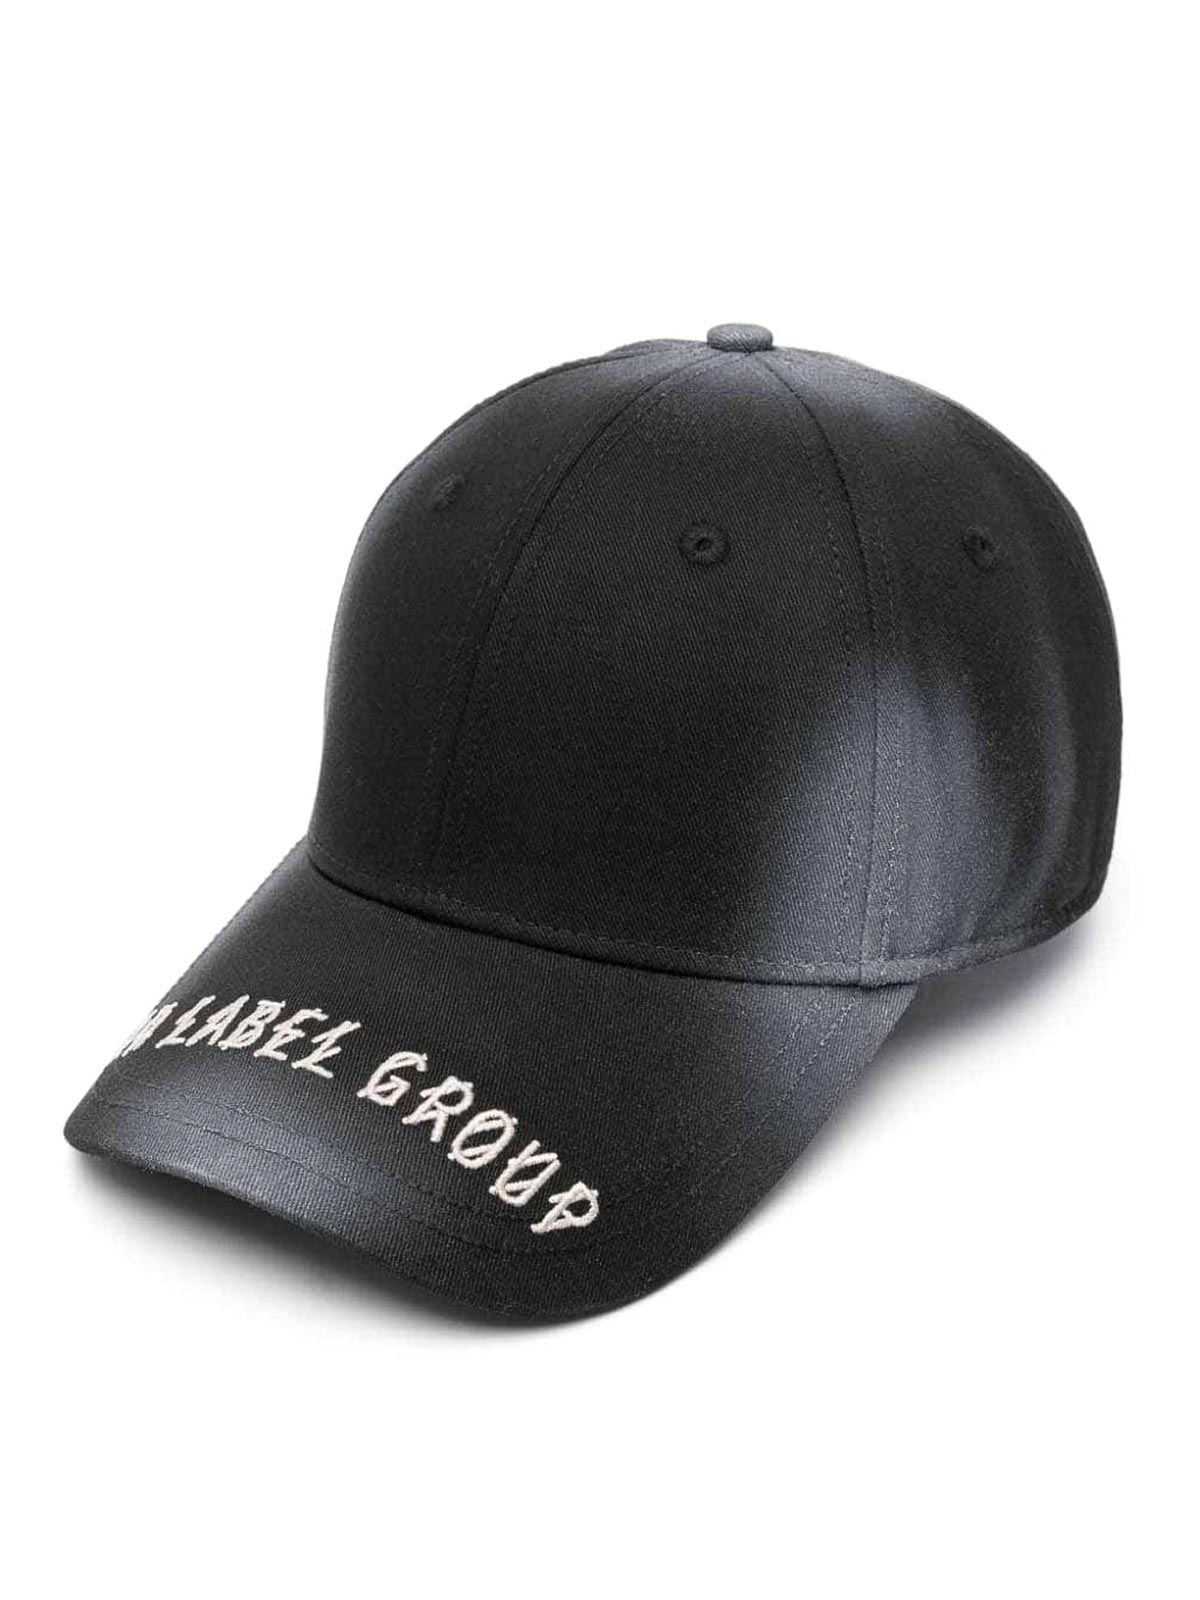 Shop 44 Label Group Hat Black